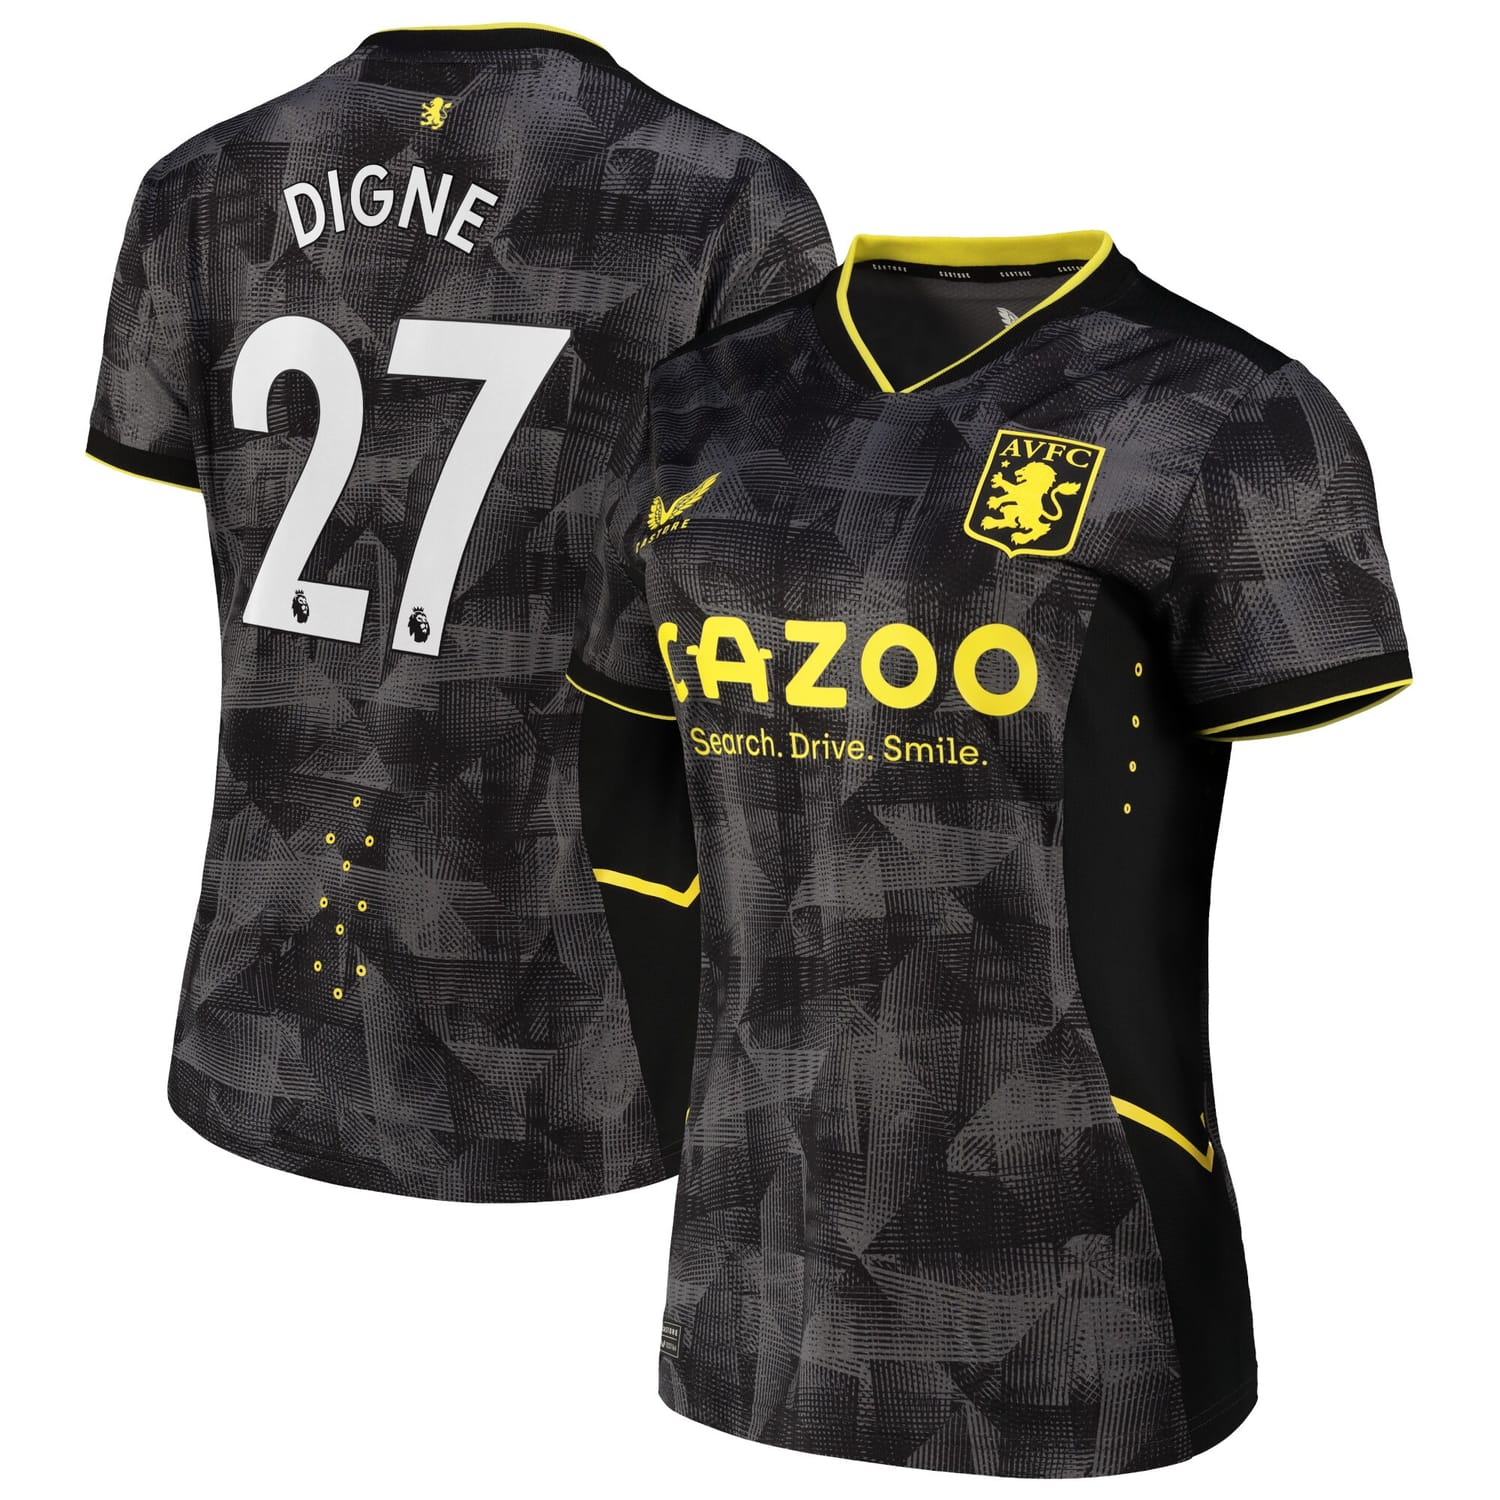 Premier League Ast. Villa Third Pro Jersey Shirt 2022-23 player Lucas Digne 27 printing for Women